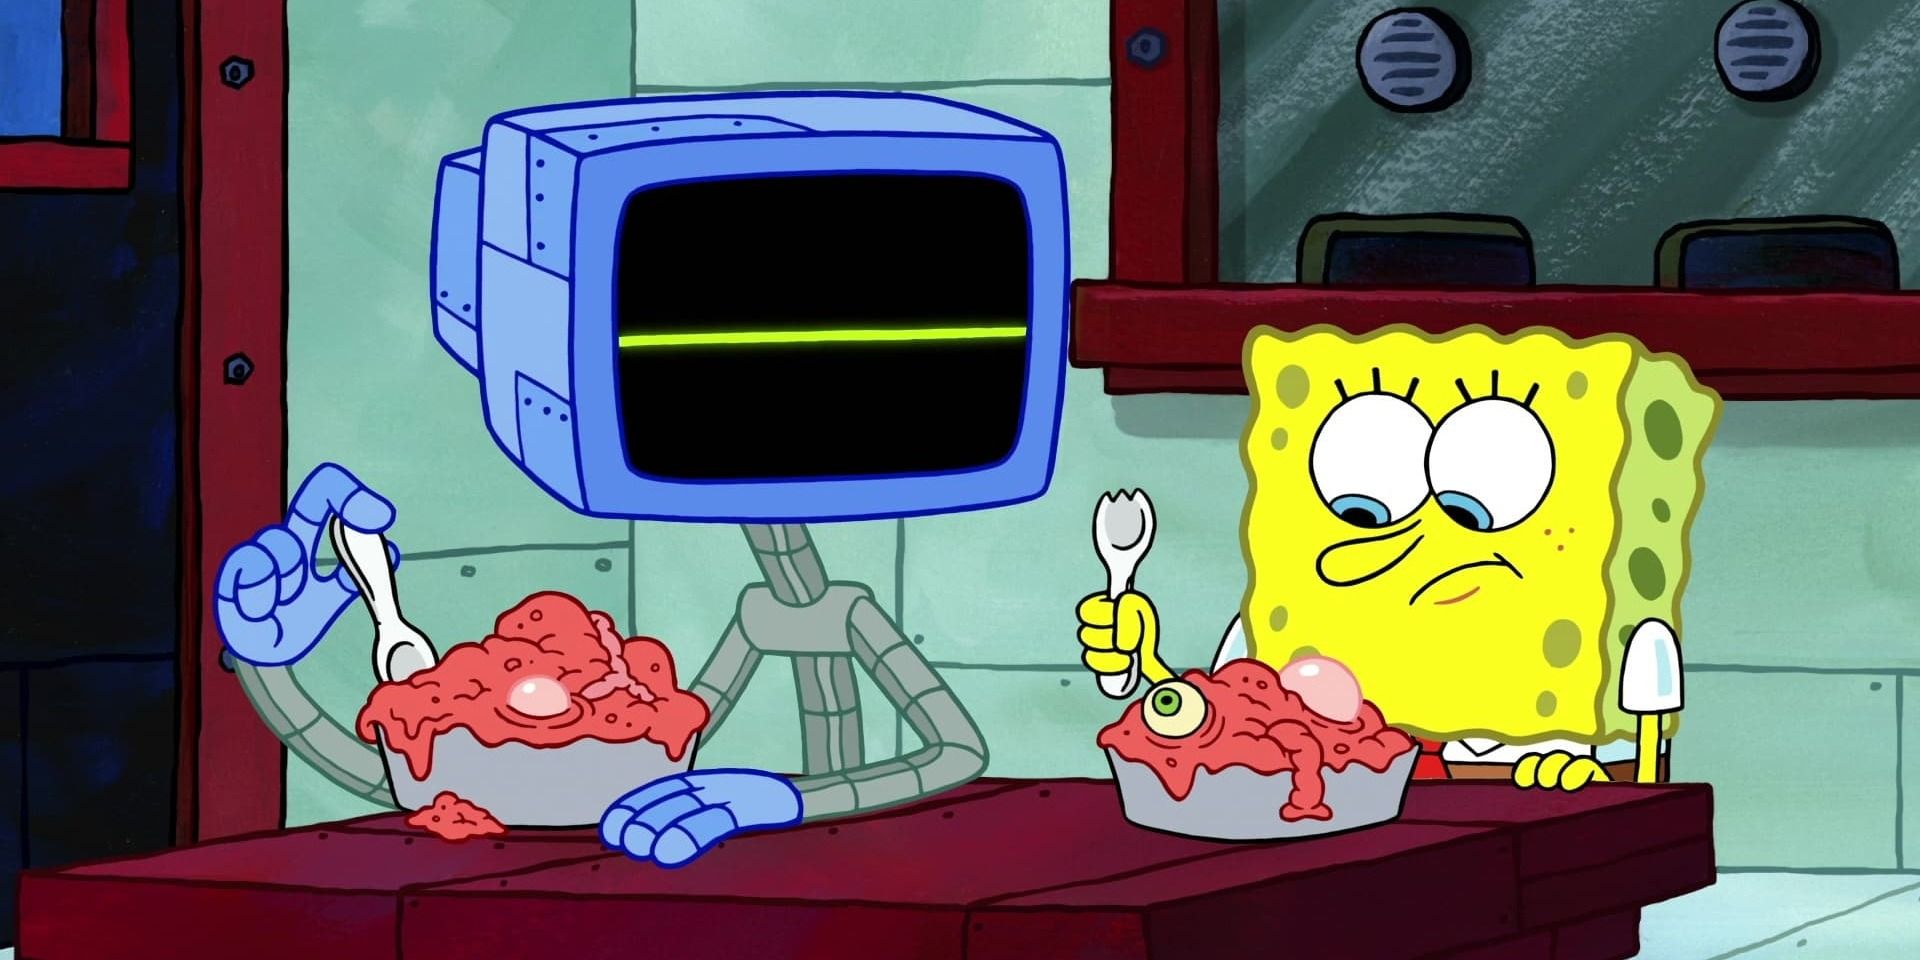 A still of Karen and SpongeBob eating Chum from SpongeBob SquarePants